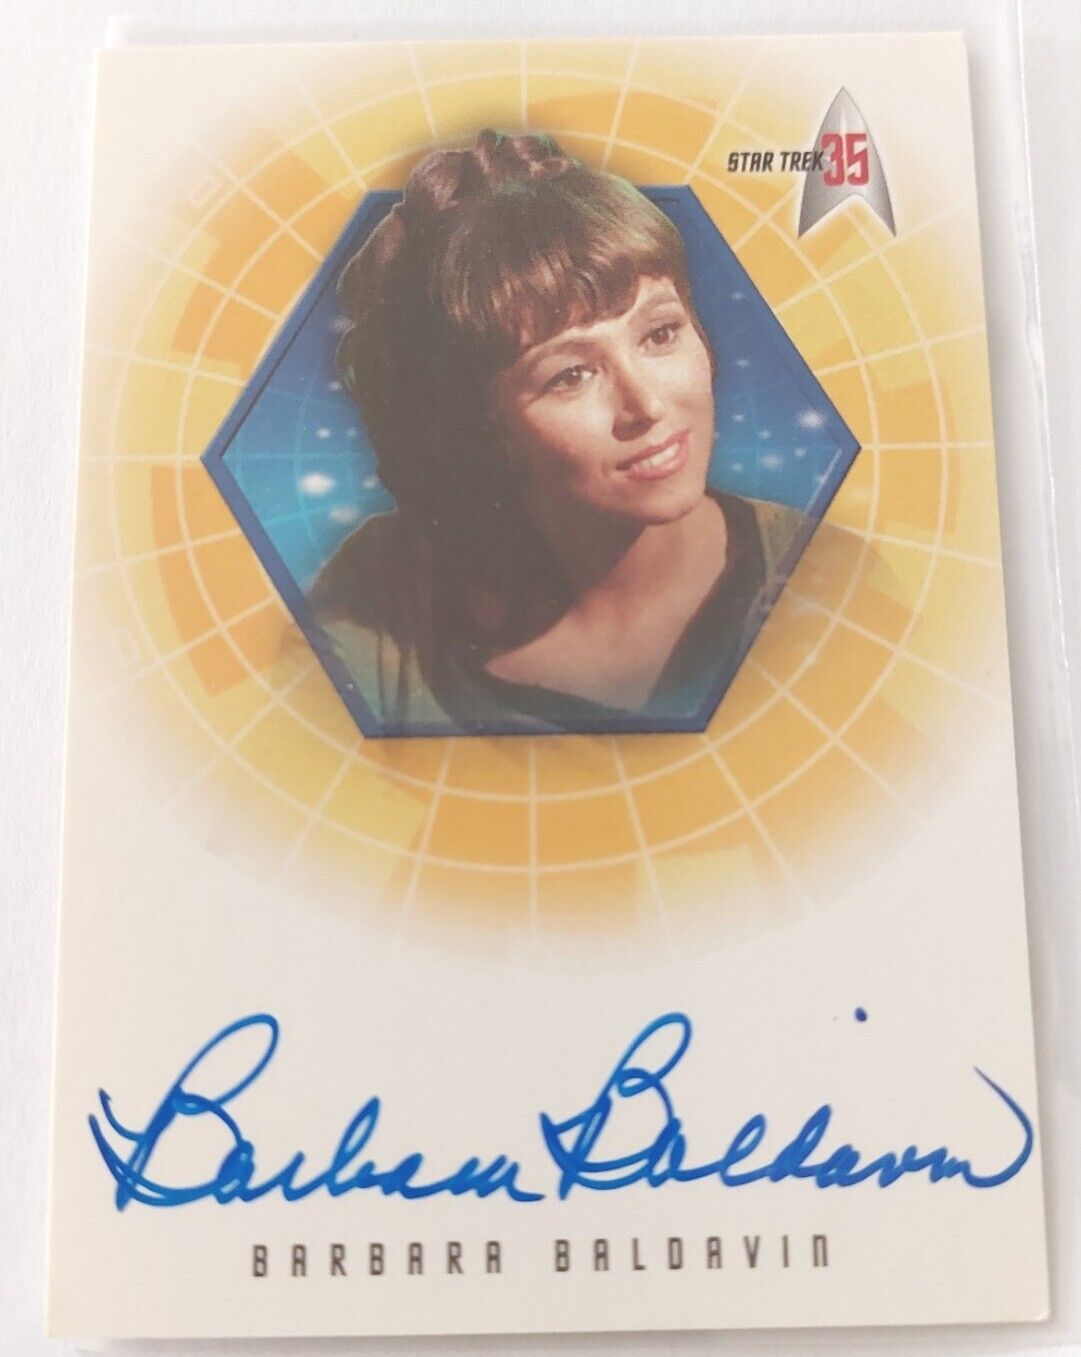 2001 Star Trek TOS 35th Anniversary autograph card A26 Barbara Baldavin Martine